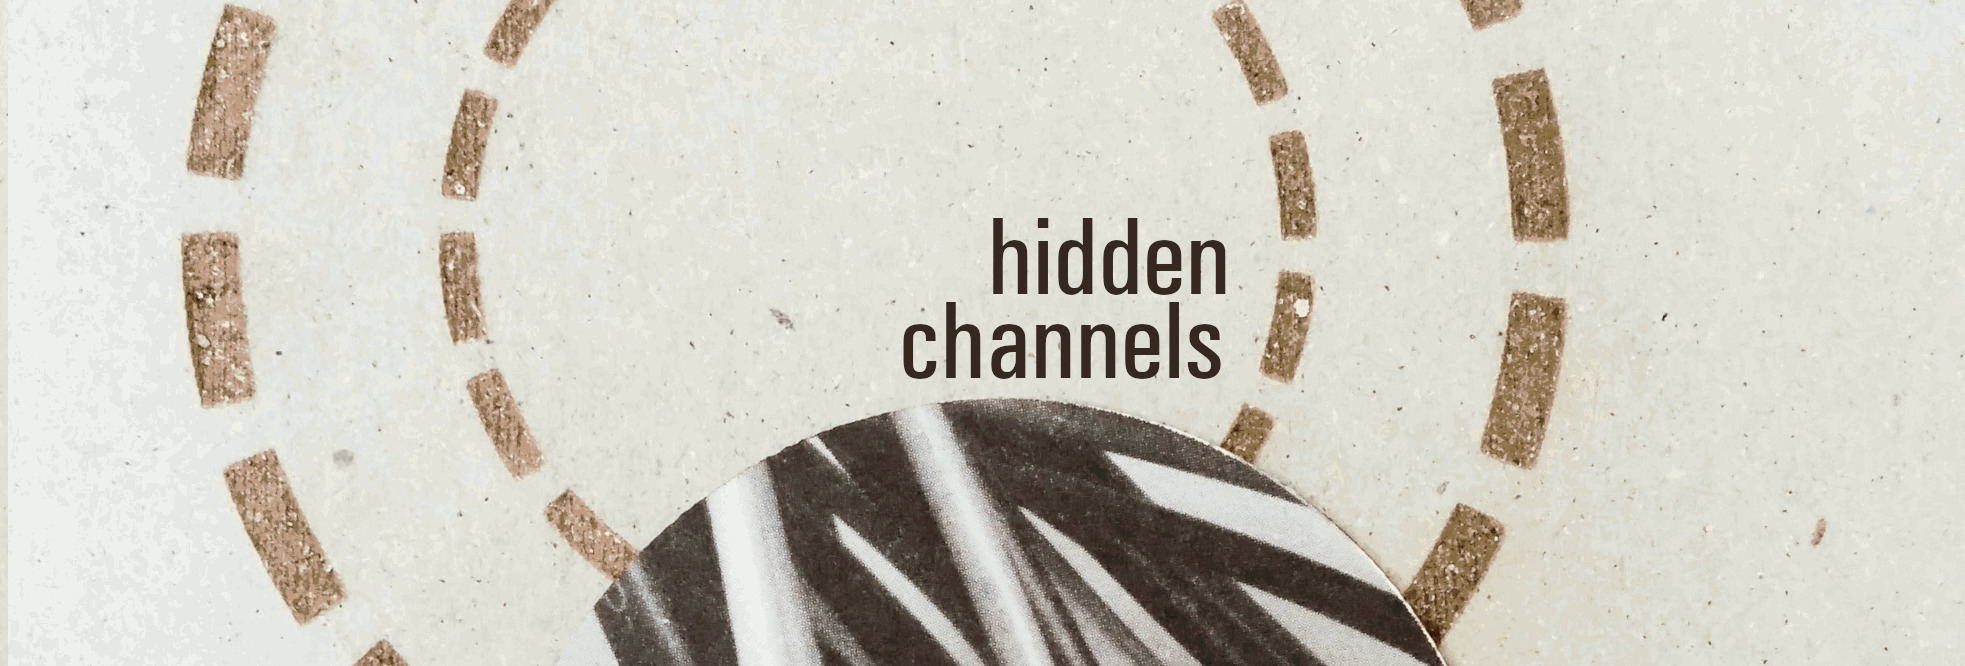 hidden channels meet up and improv